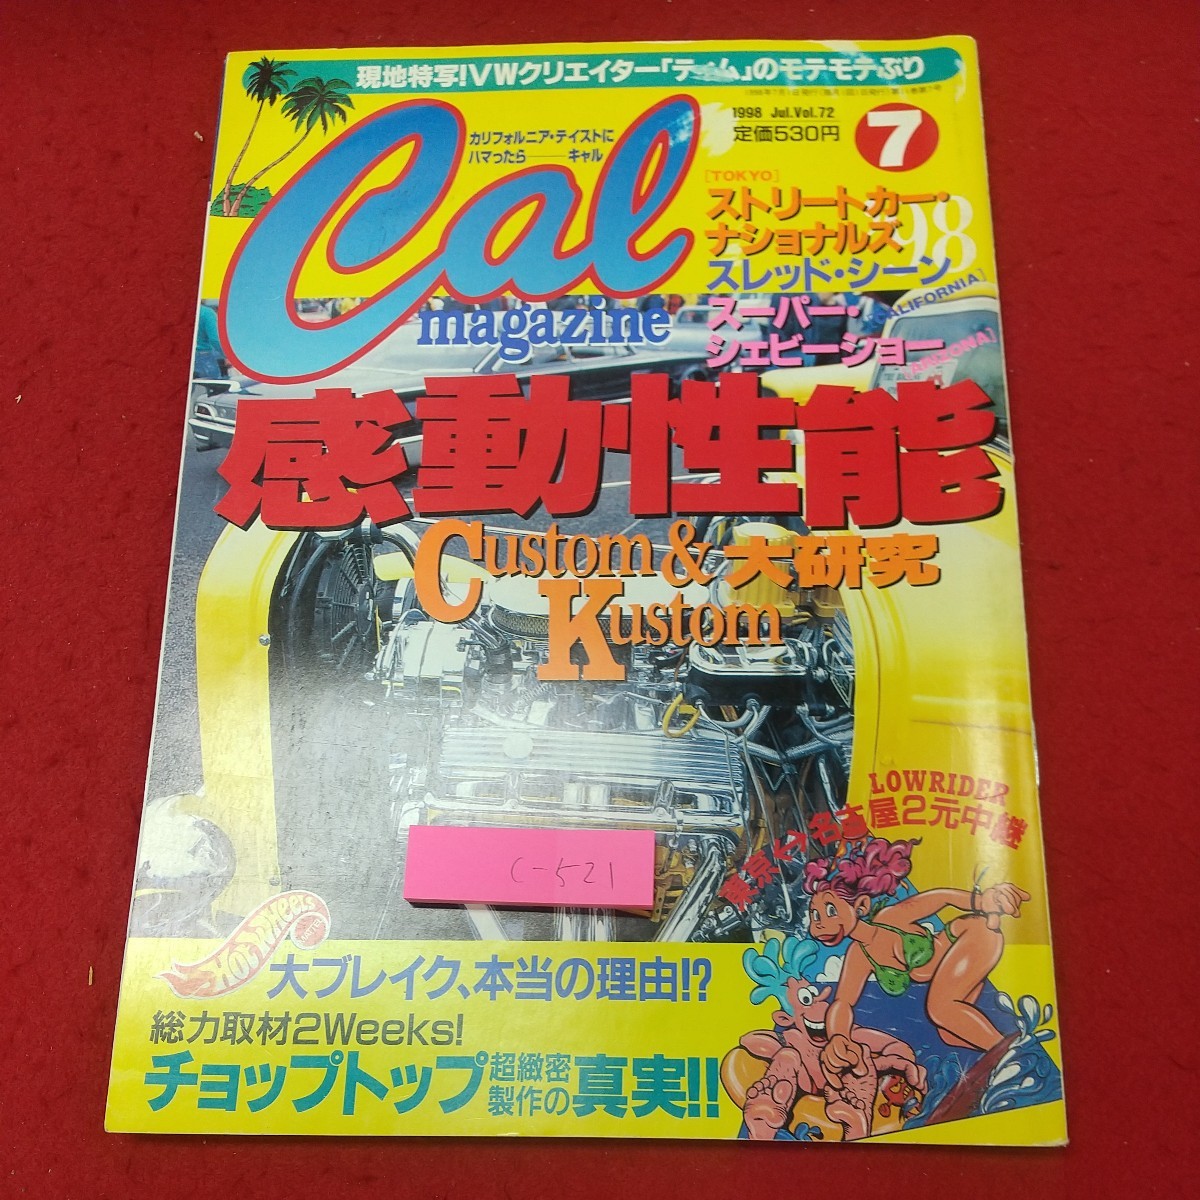 c-521※1 キャルマガジン 1998年7月号 1998年7月1日 発行 日本ジャーナル出版 雑誌 自動車 カスタム車 カスタマイズ デザイン 写真_画像1